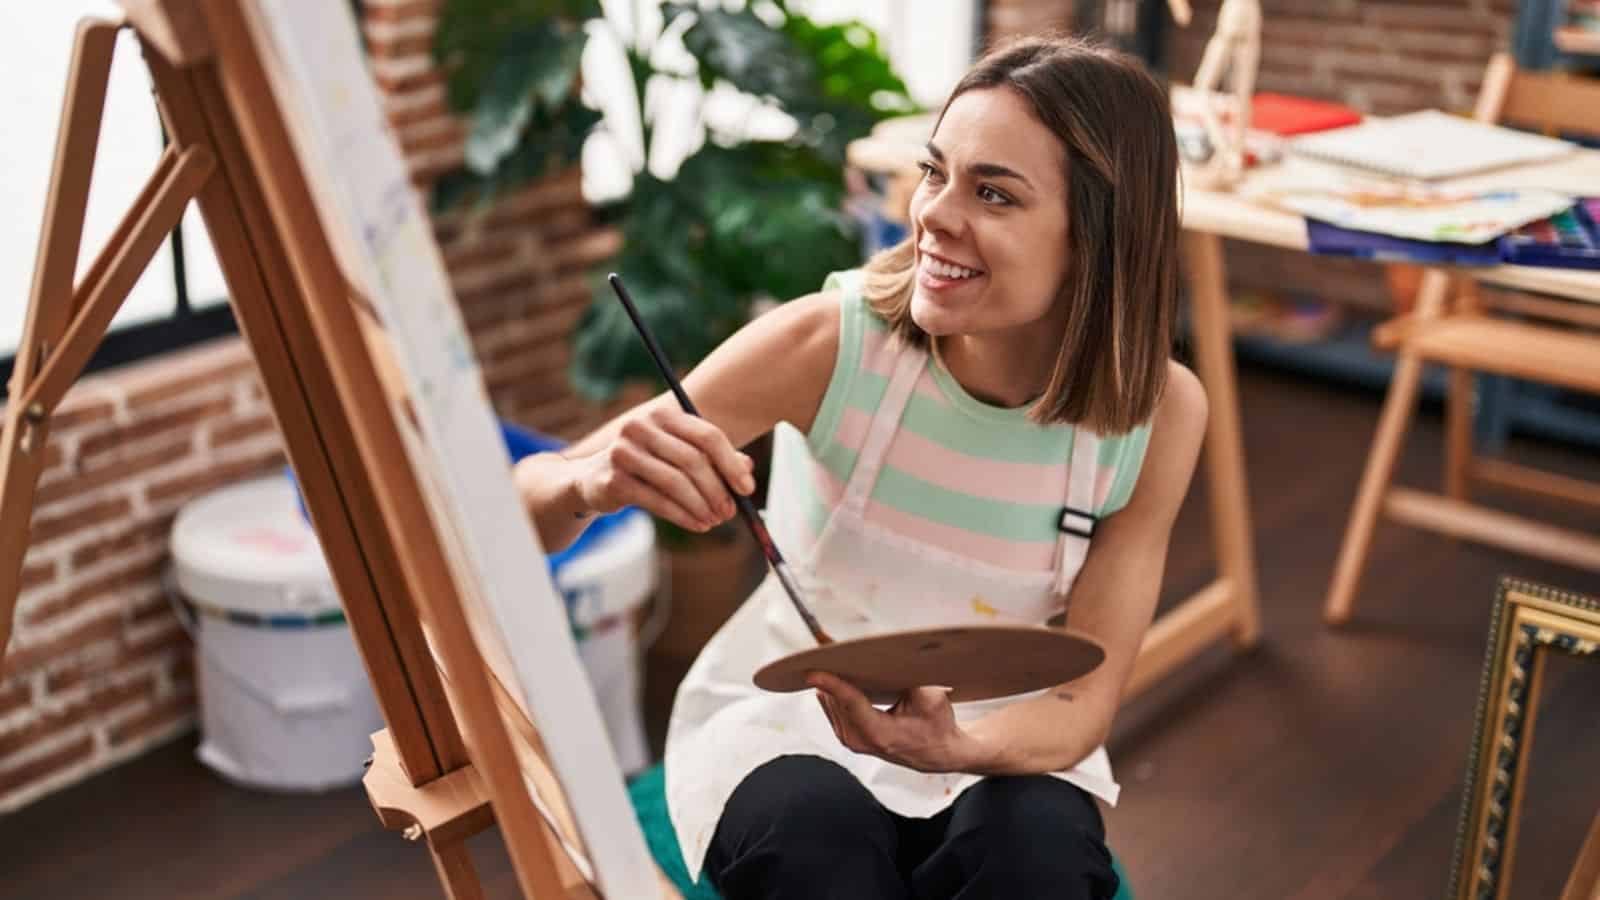 Young beautiful hispanic woman artist smiling confident drawing at art studio